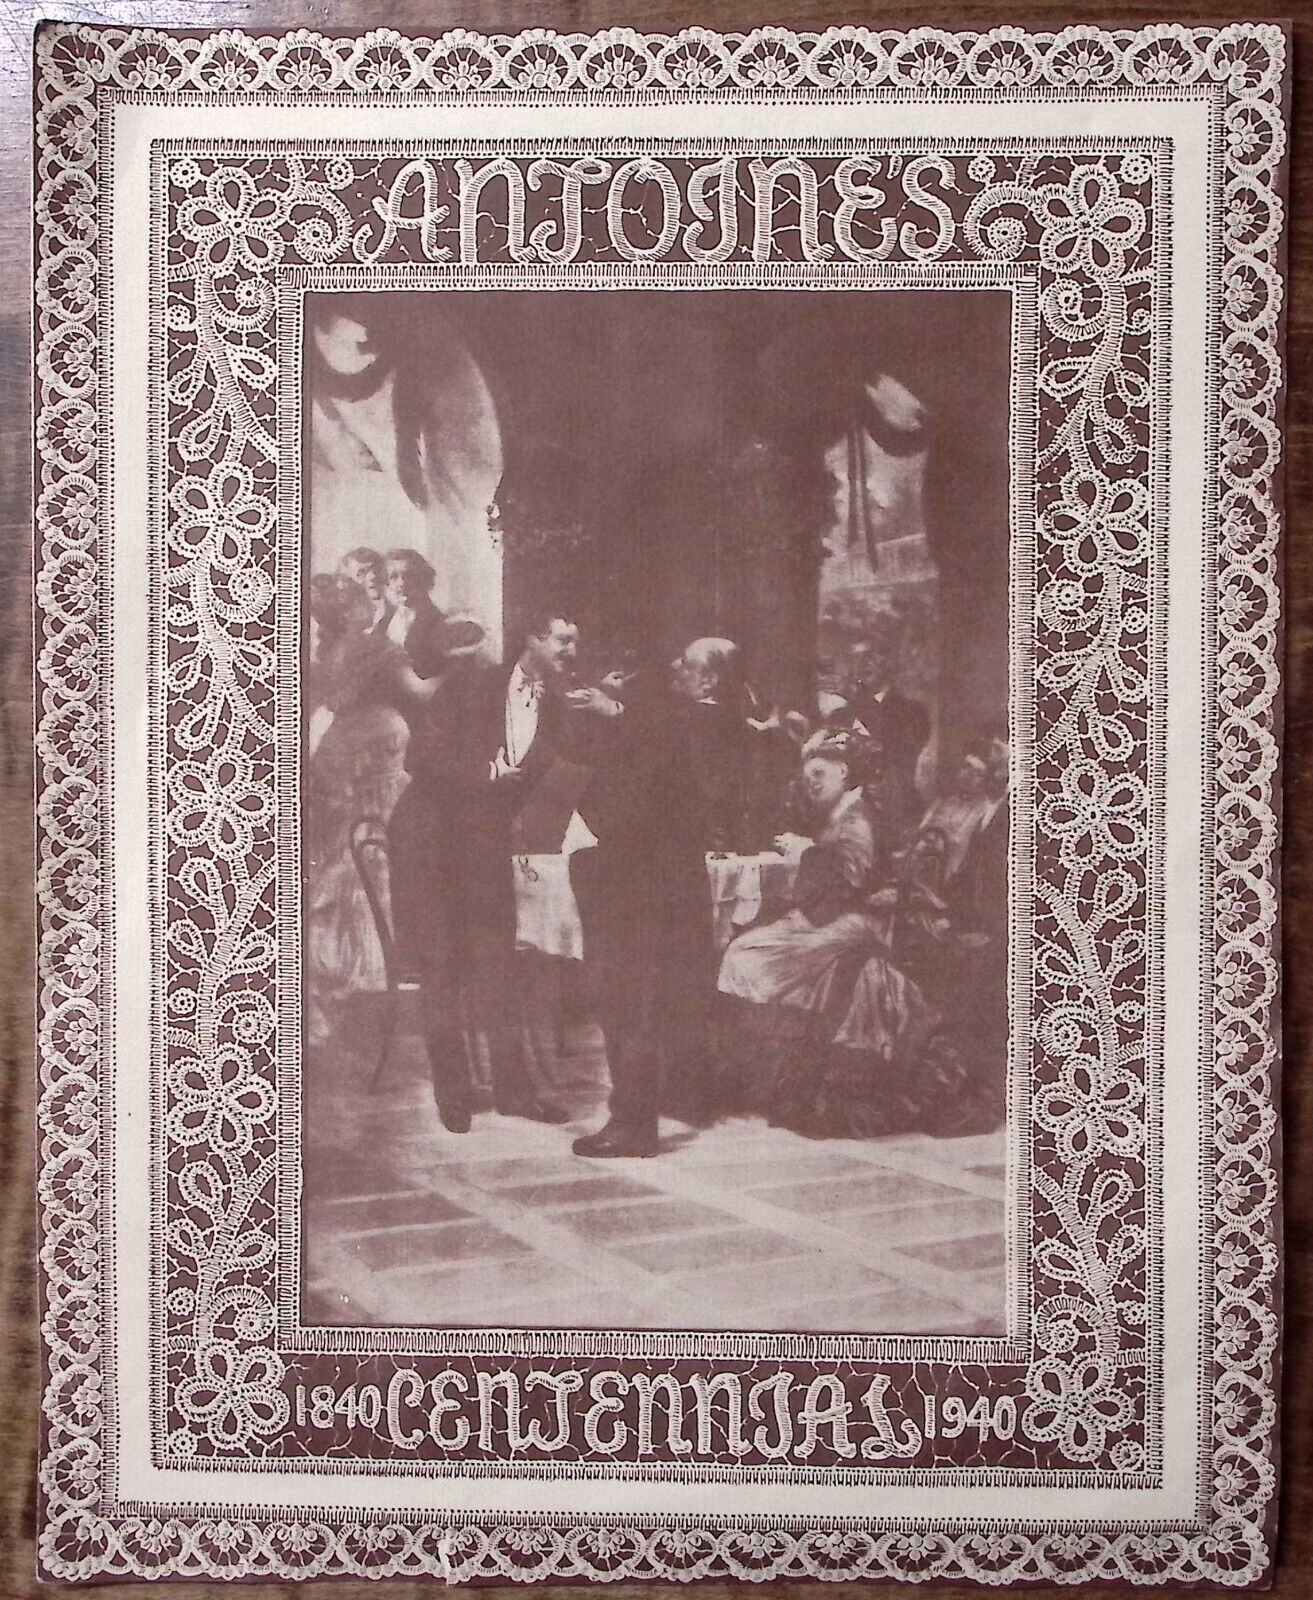 ORIGINAL 1840-1940 100 YEAR CENTENNIAL MENU ANTOINE'S RESTAURANT NEW ORLEANS W97